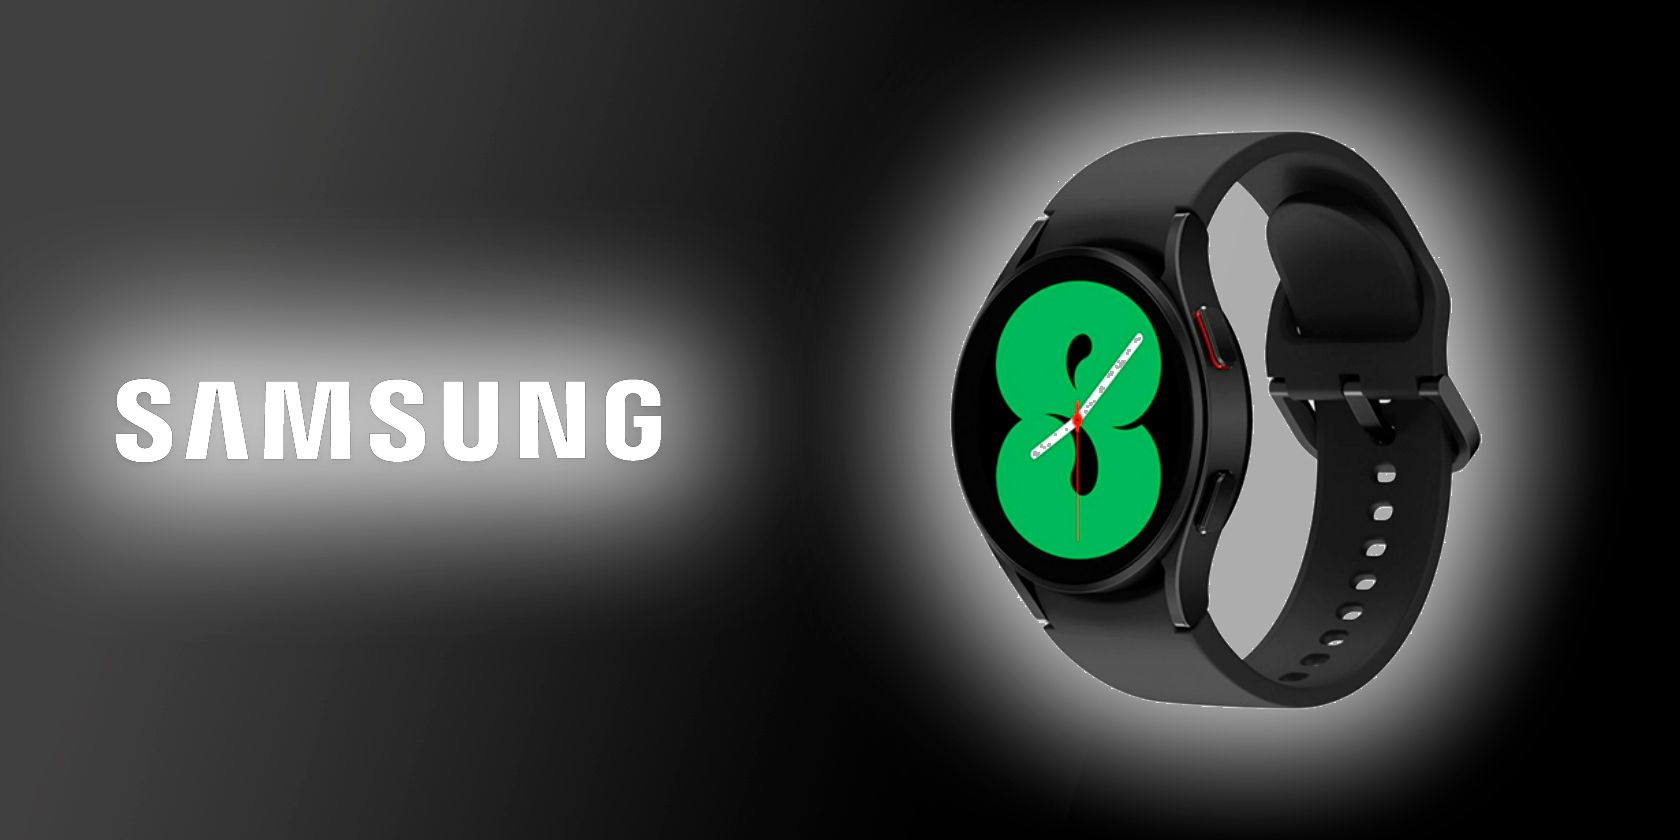 Samsung Black Friday 2021 Galaxy Watch4 Bundles You Won't Want to Miss